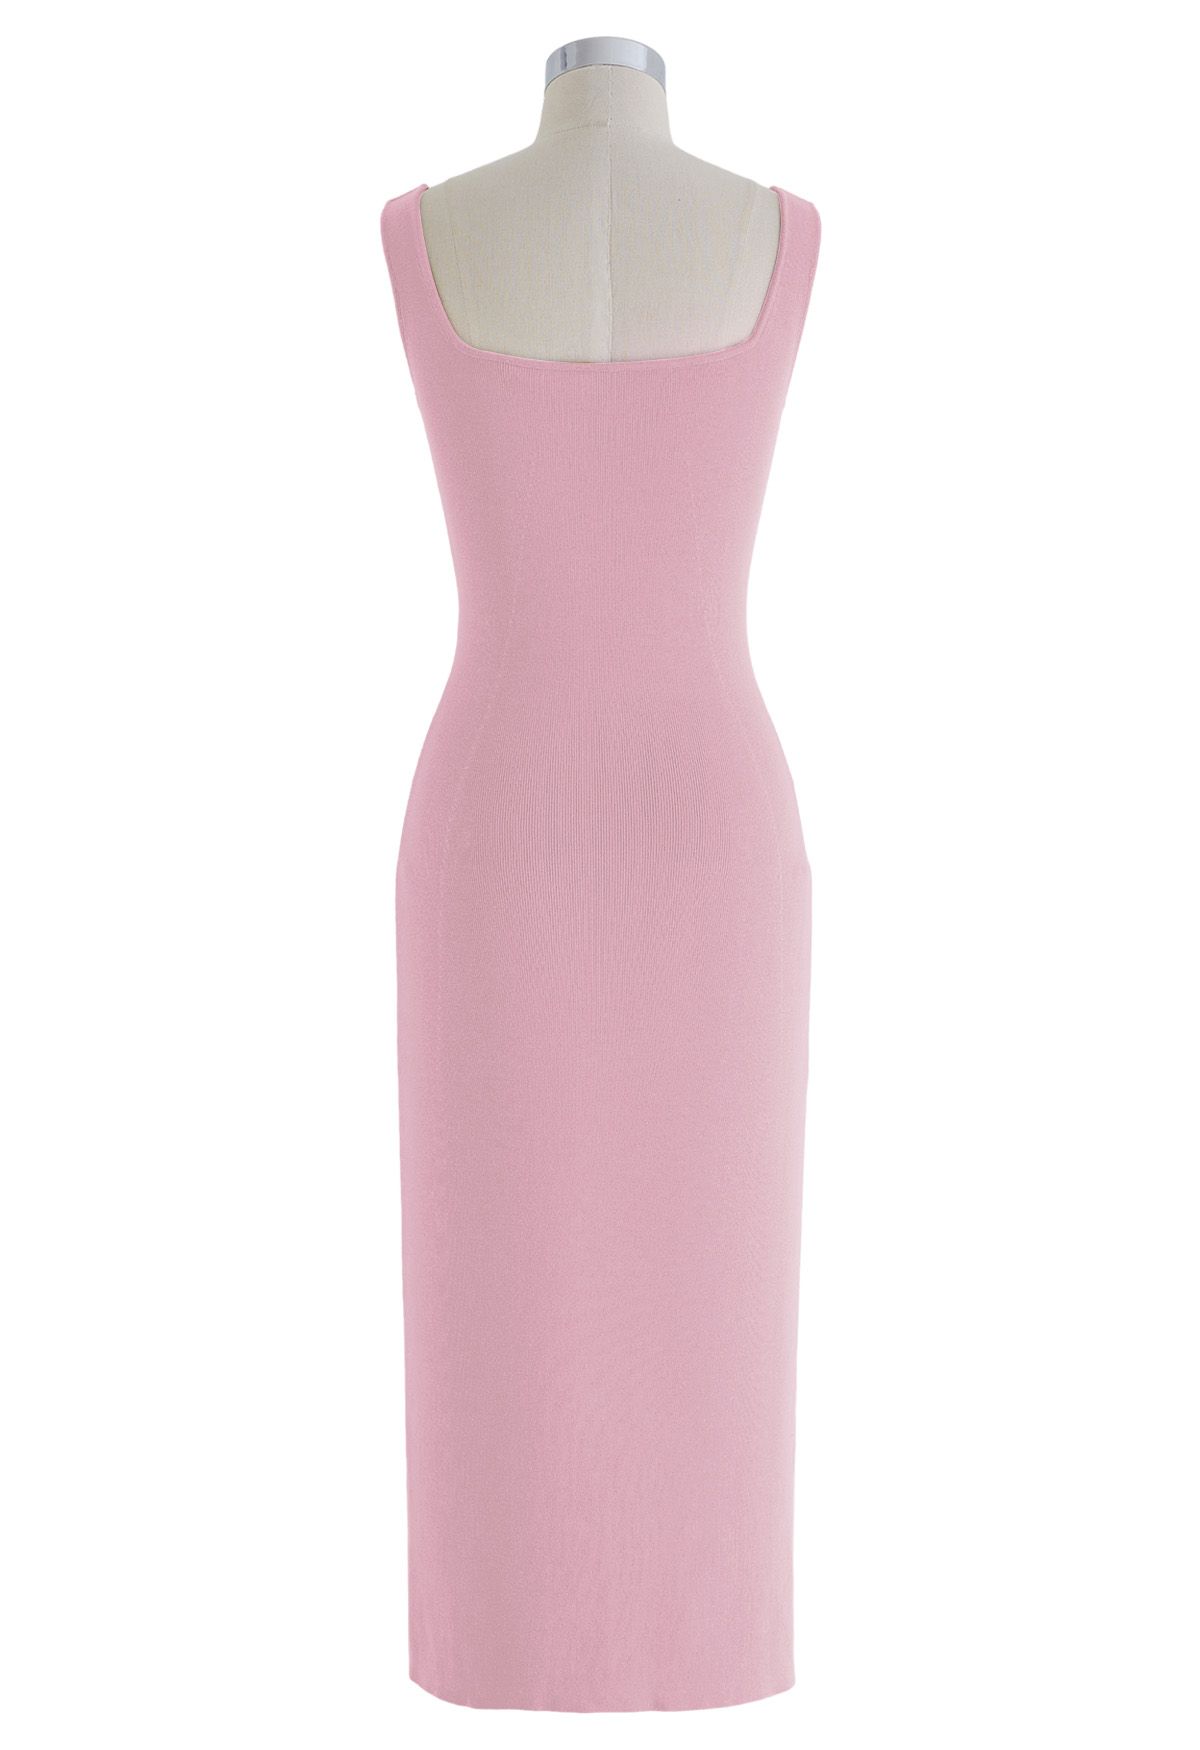 Notch Neckline Bodycon Knit Dress in Pink